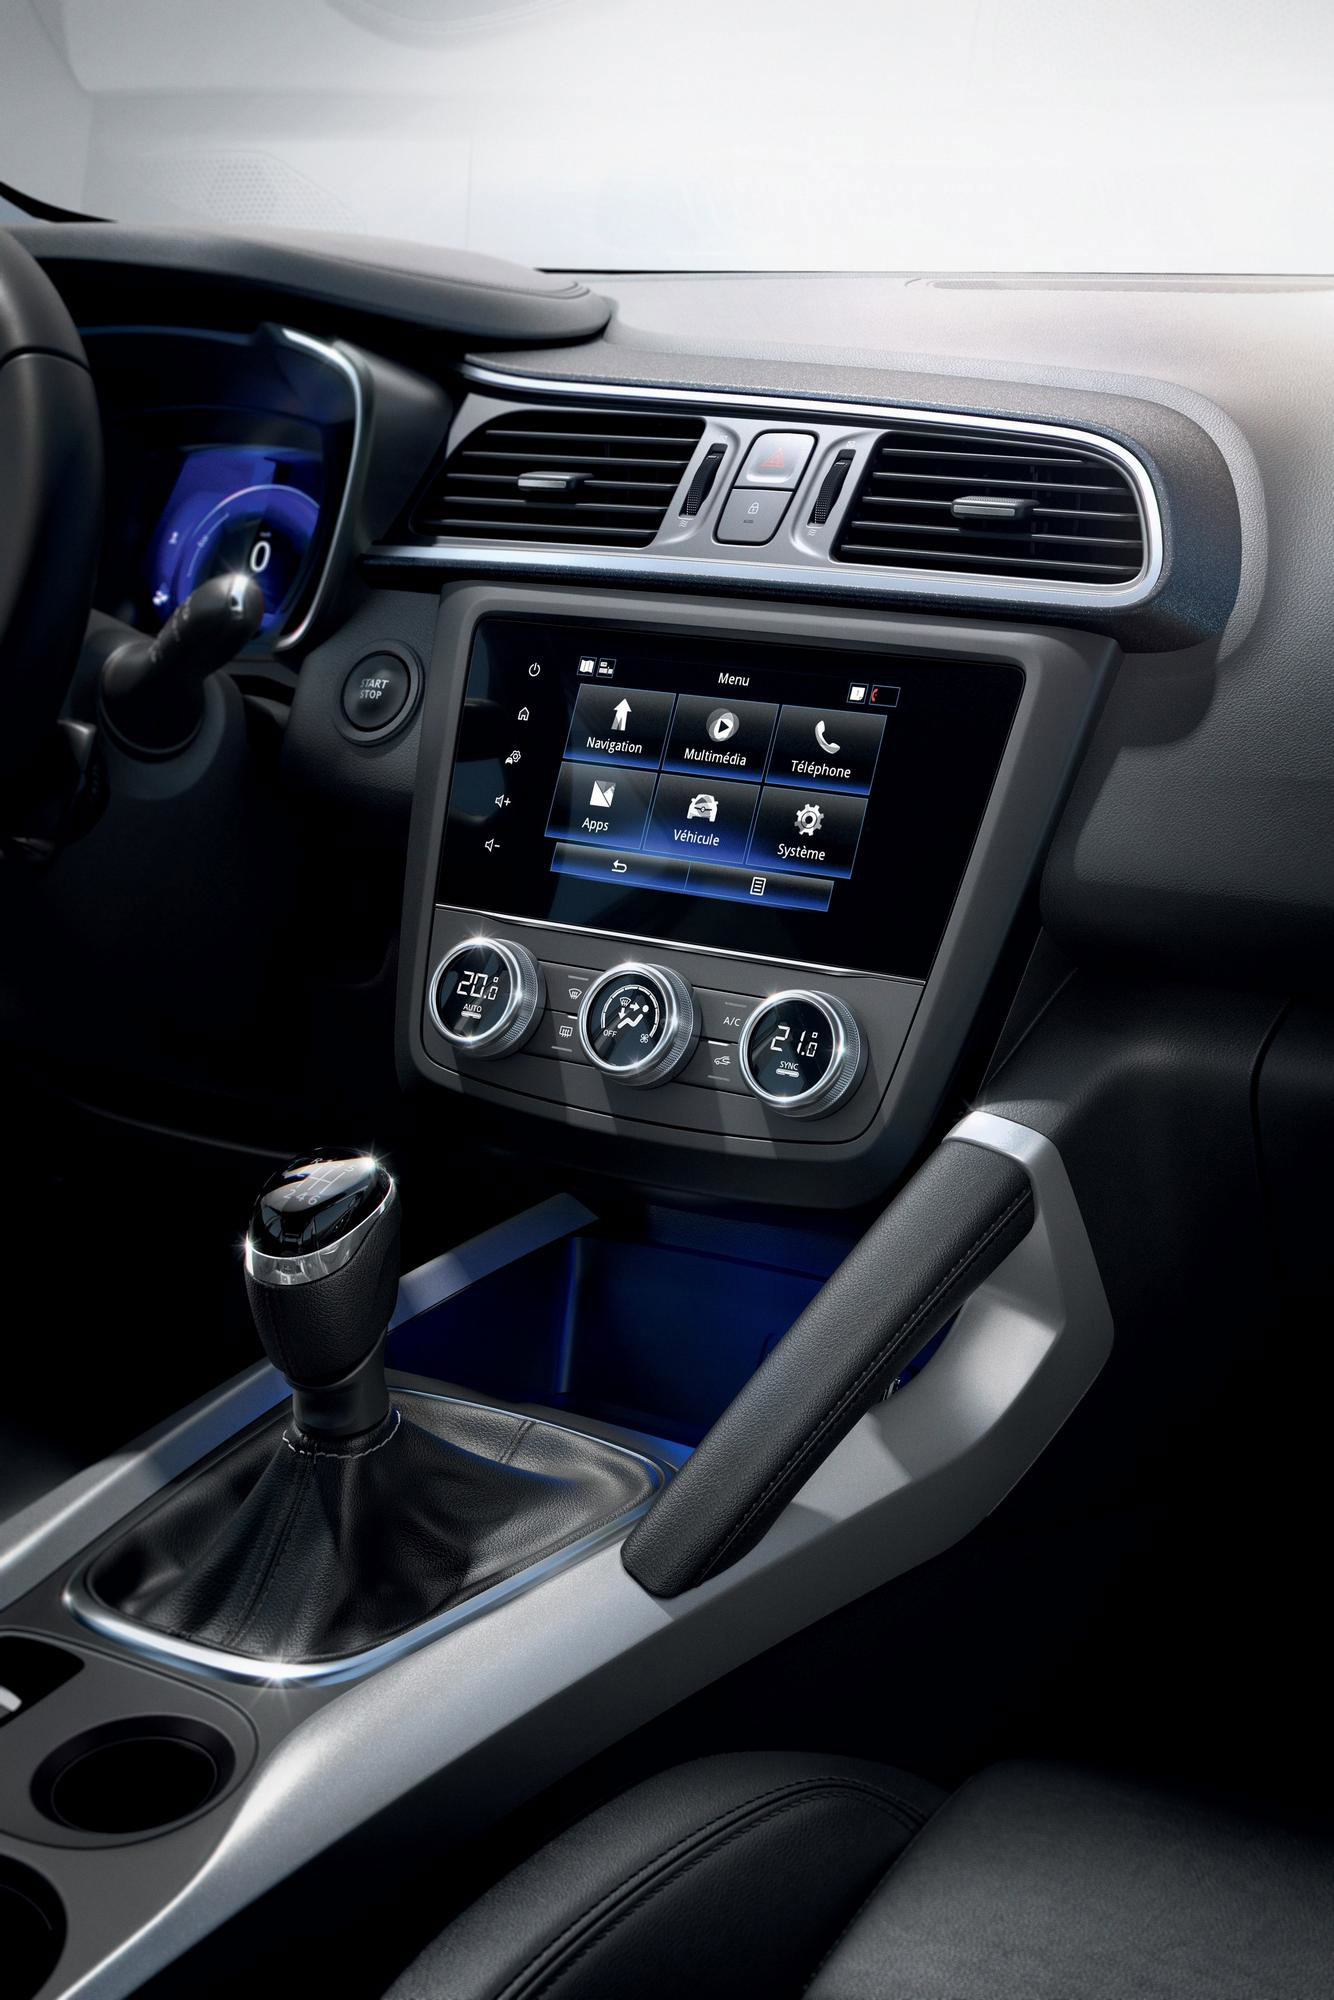 2019 Renault Kadjar facelift – Design, Interior and Driving 